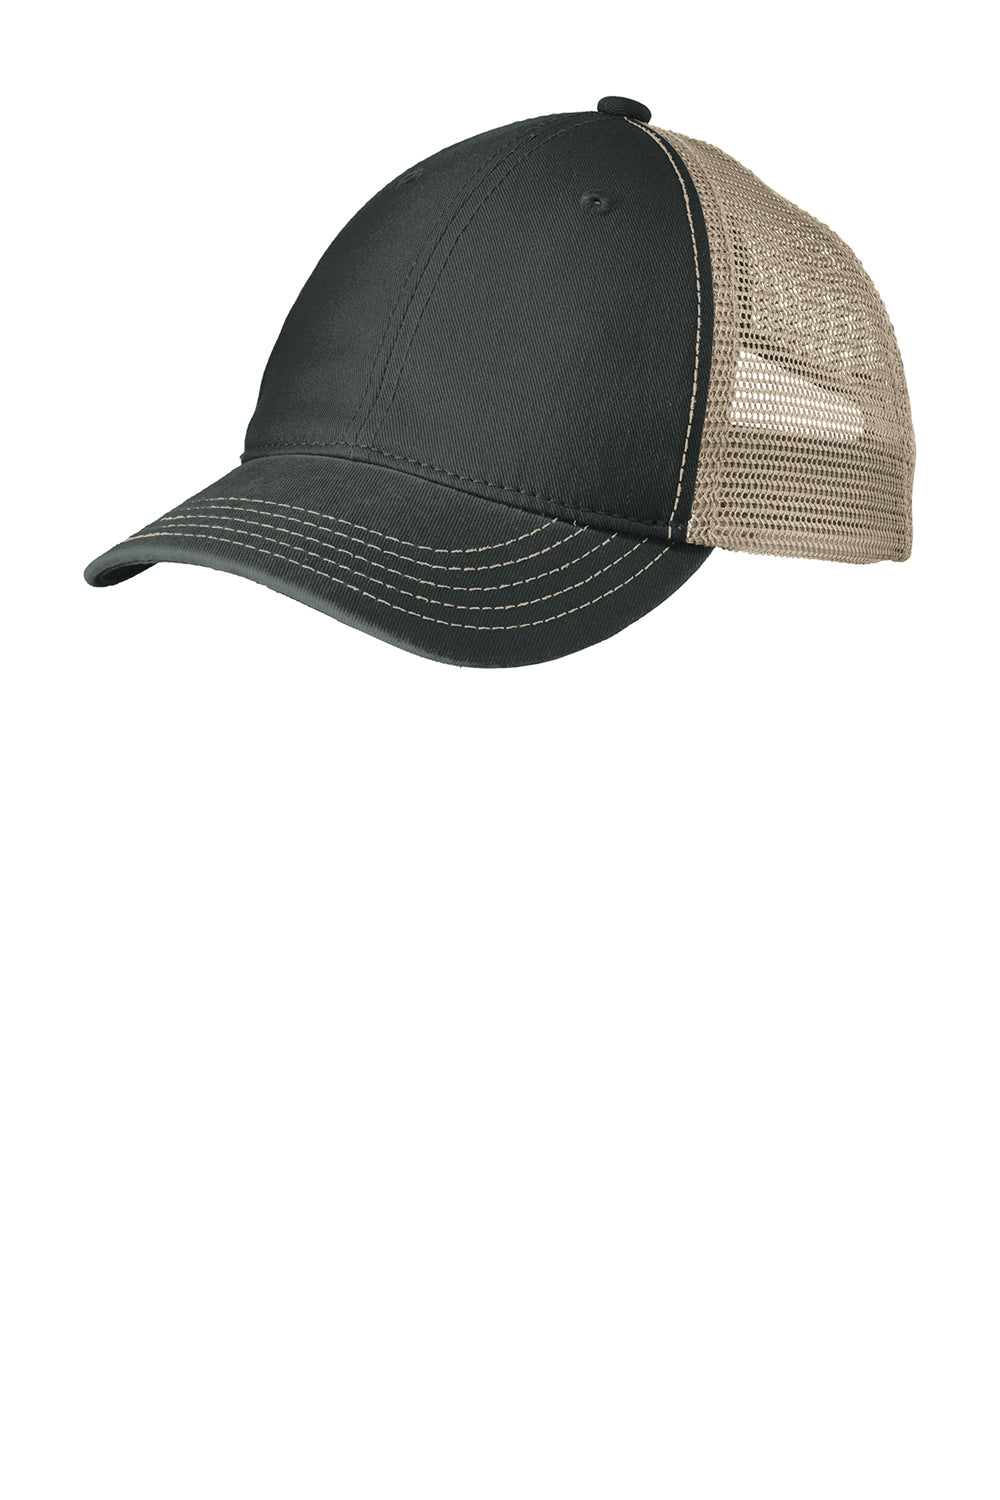 District DT630 Mens Adjustable Hat Black/Khaki Brown Front